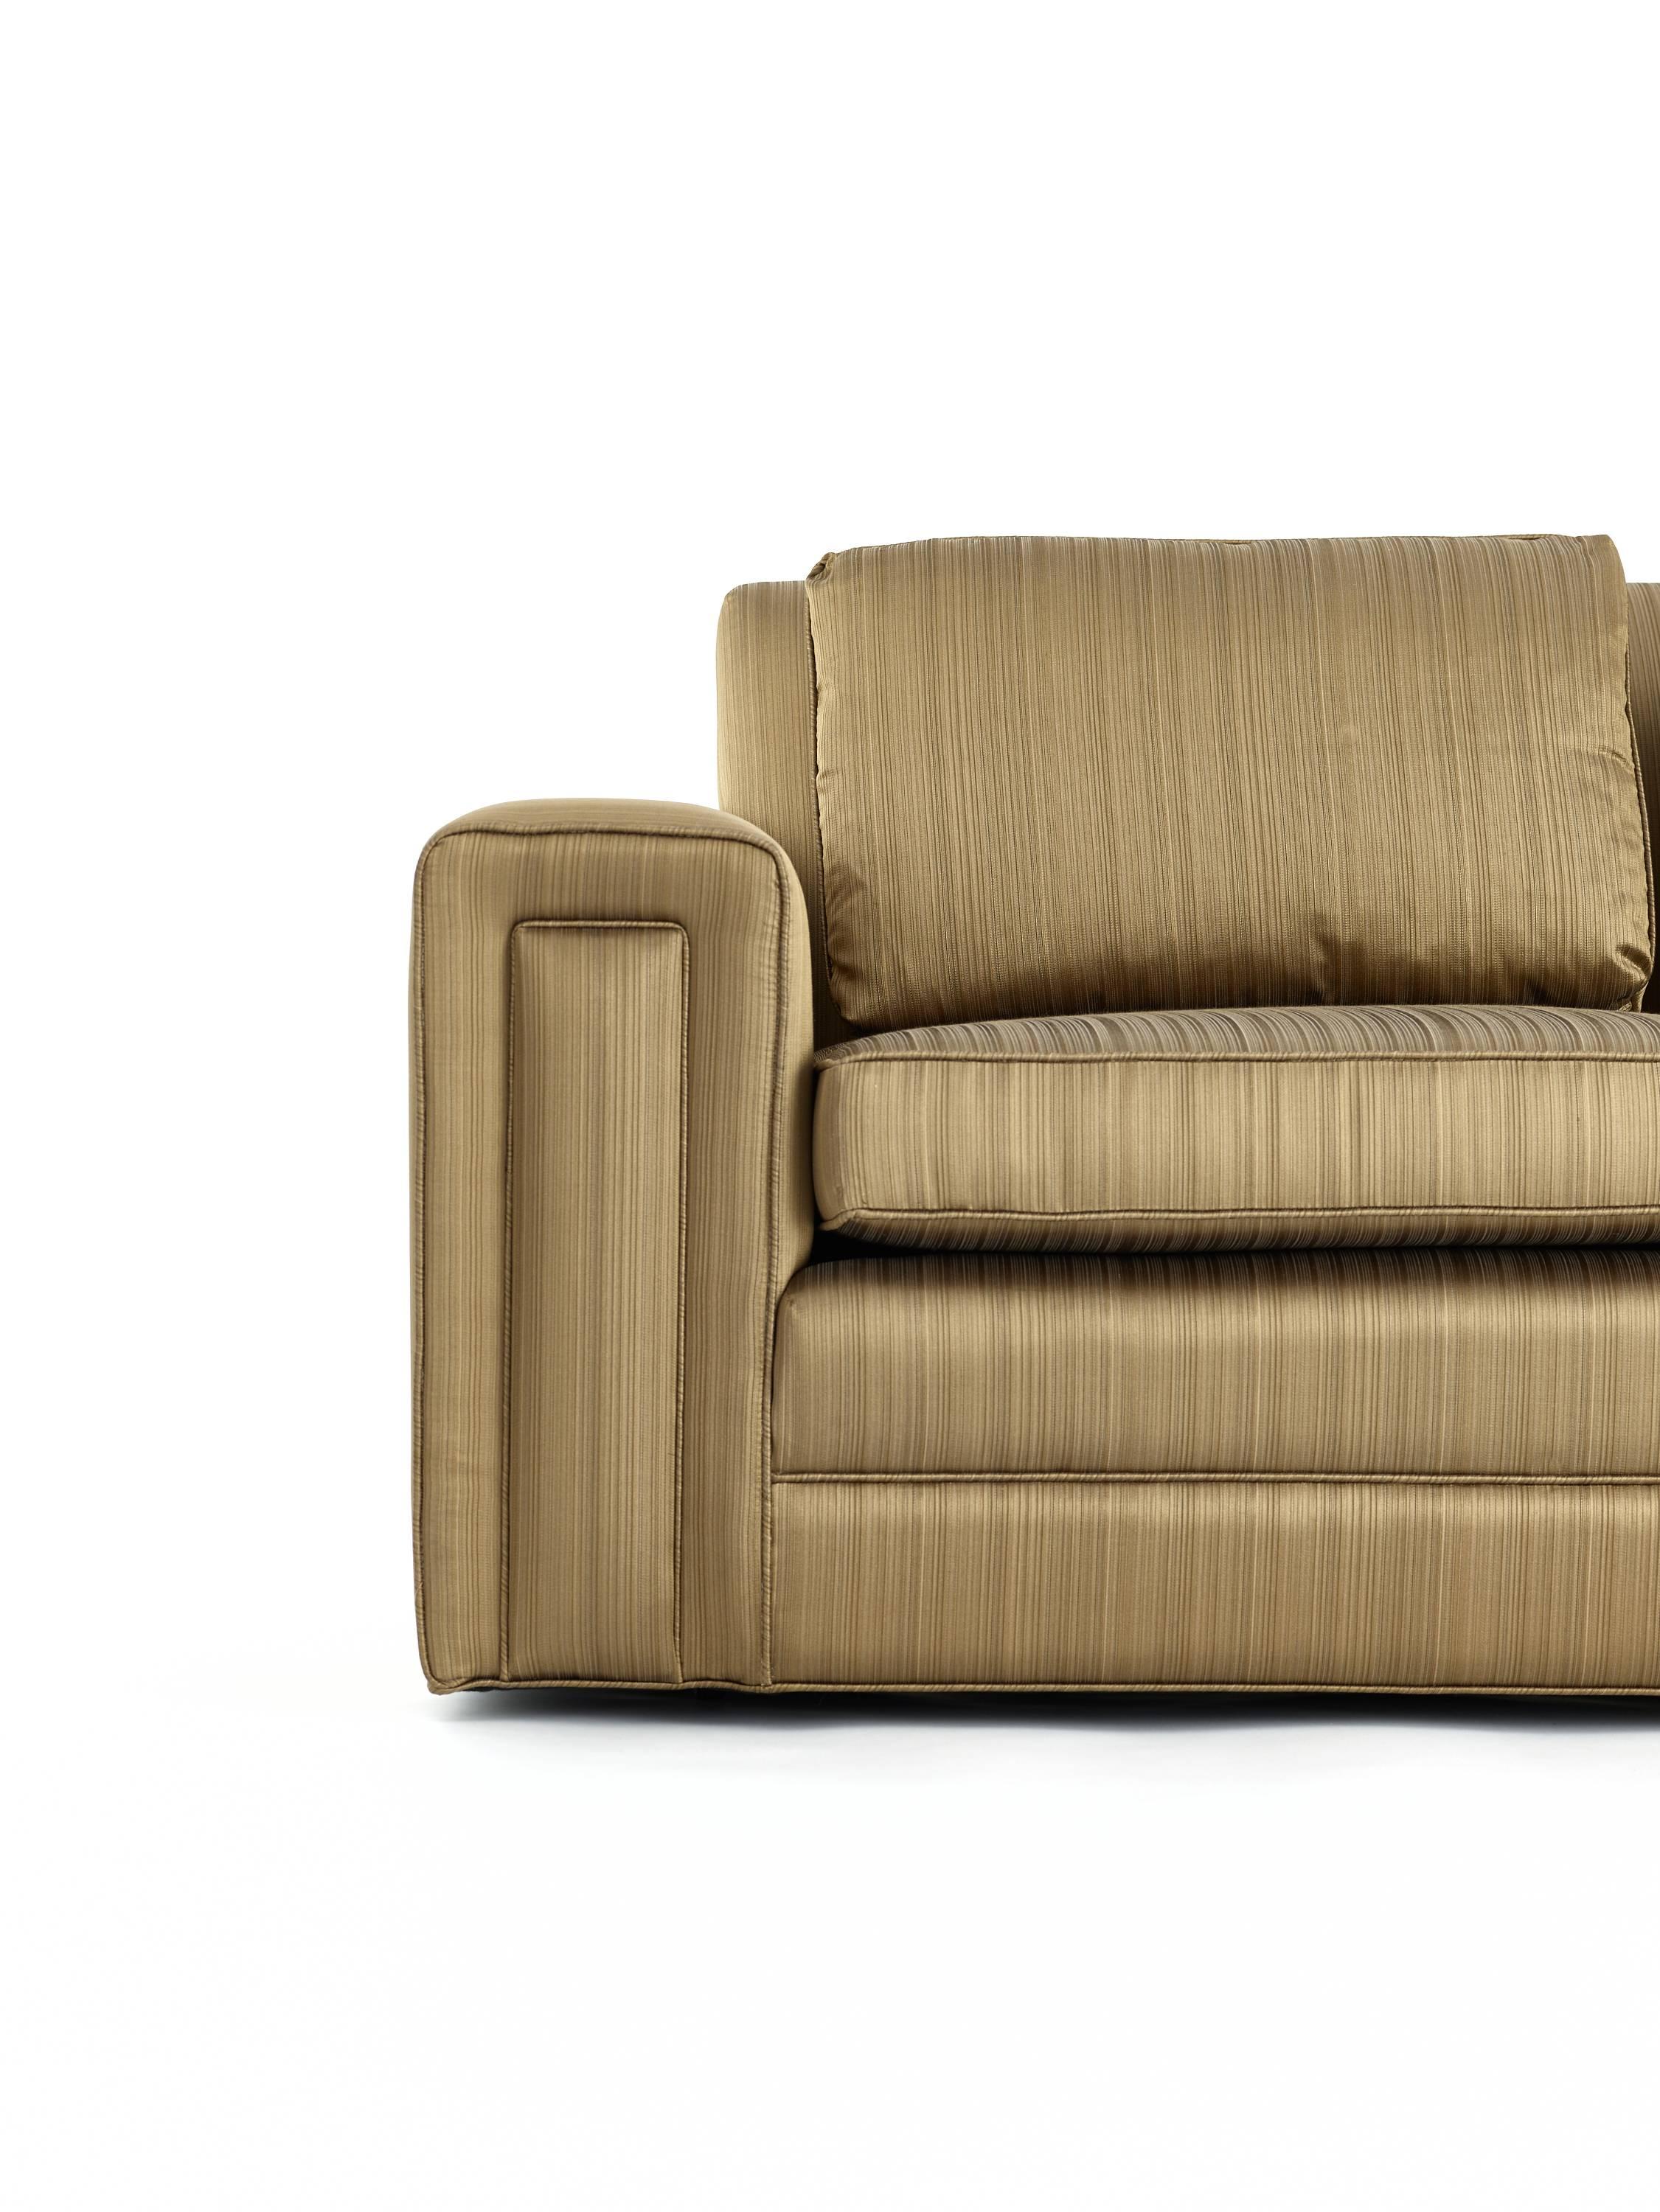 American Paul Frankl Custom Sofa, Pair Available, 1940s For Sale